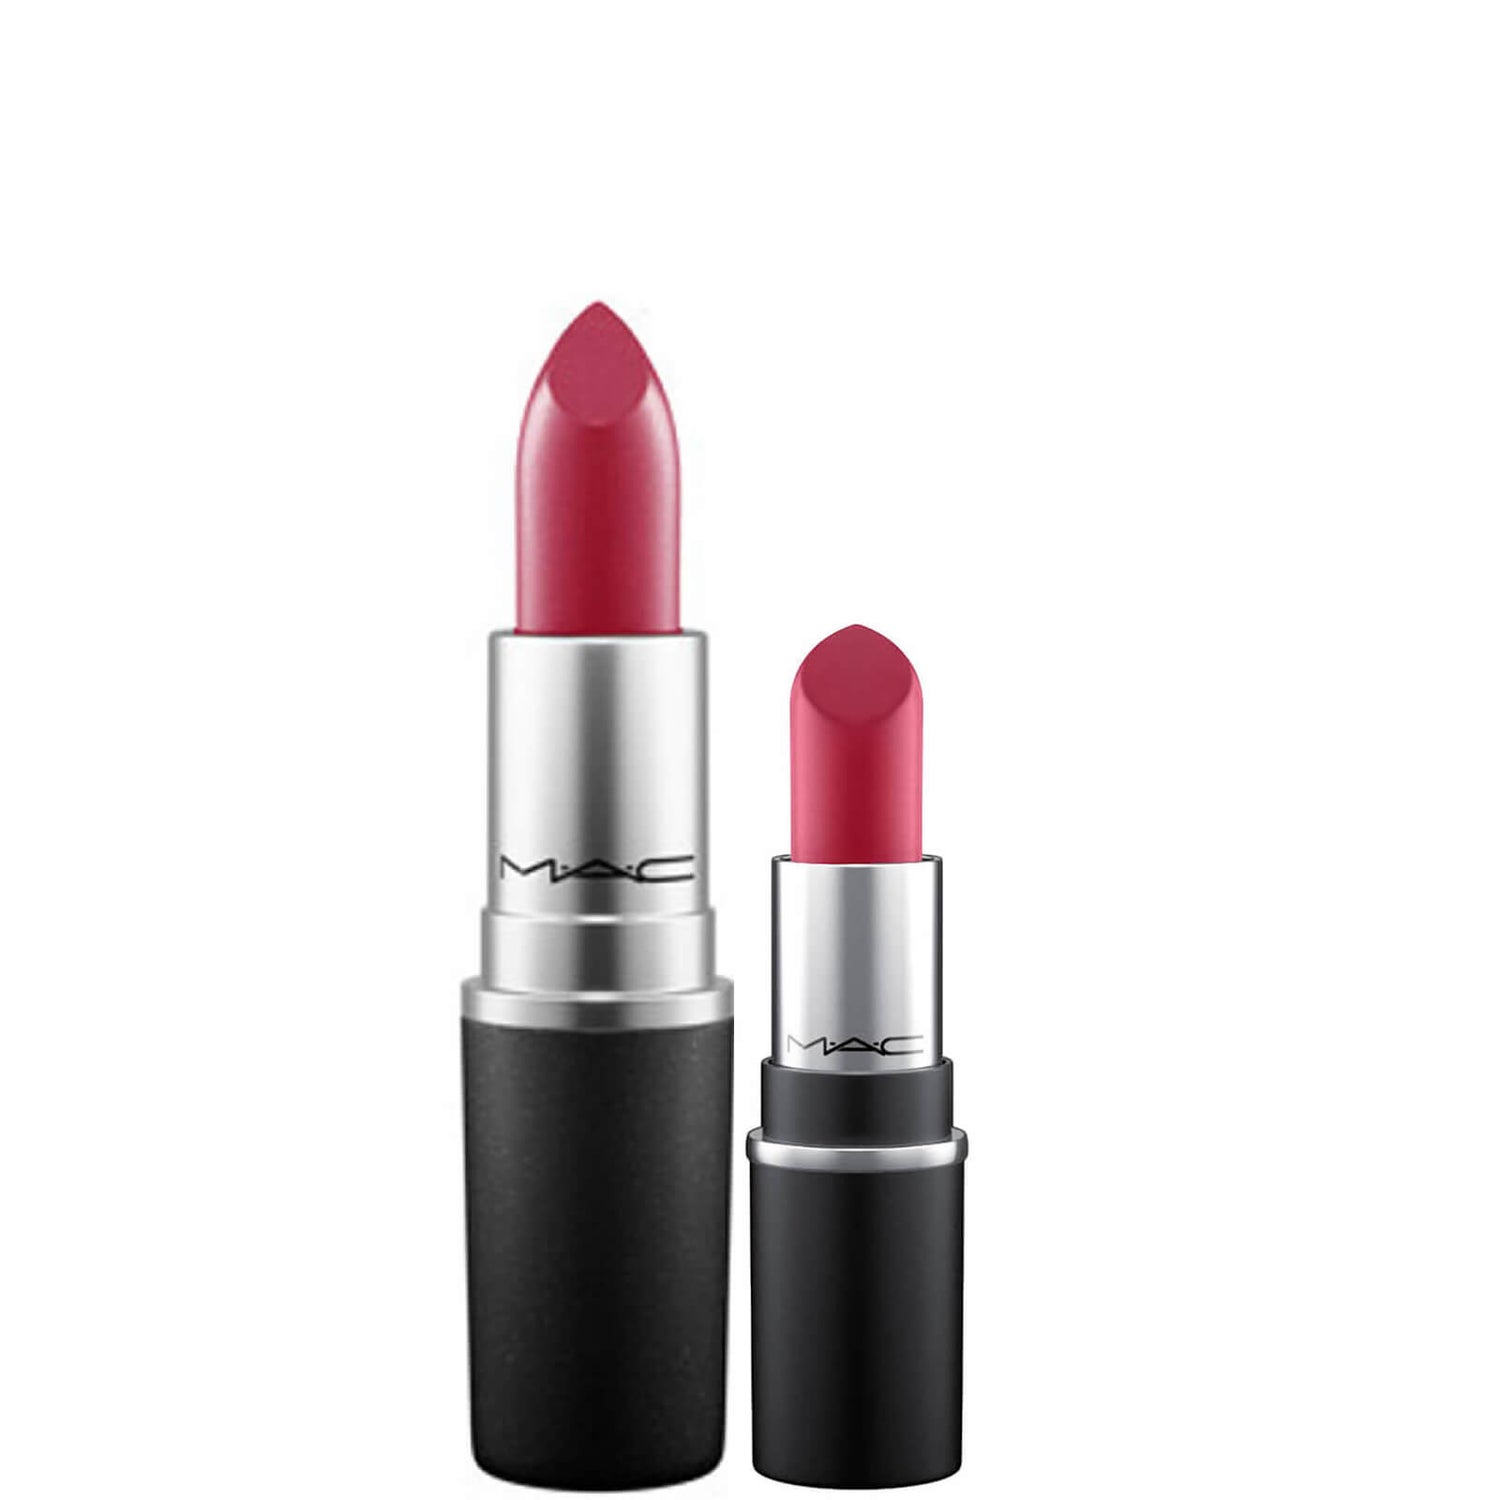 MAC D For Danger Lipstick Bundle